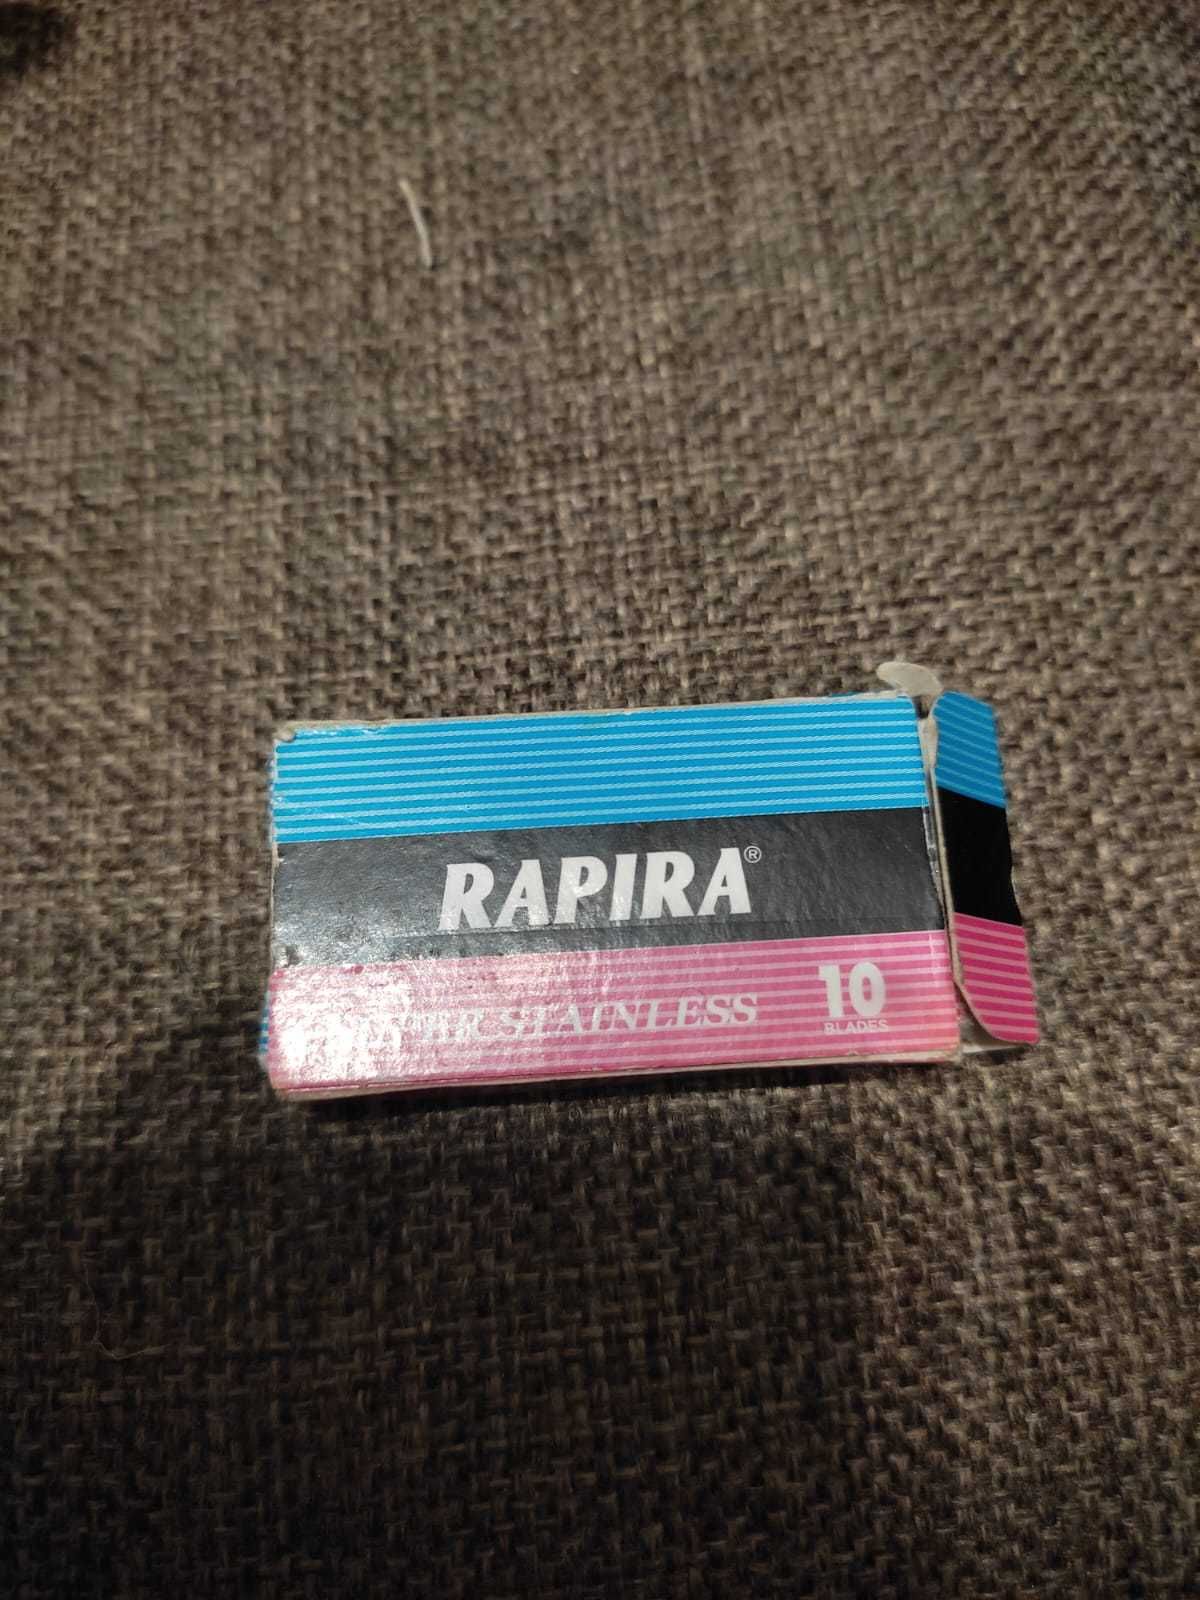 Лезвия Gillette rubie и Rapira 90-х годов